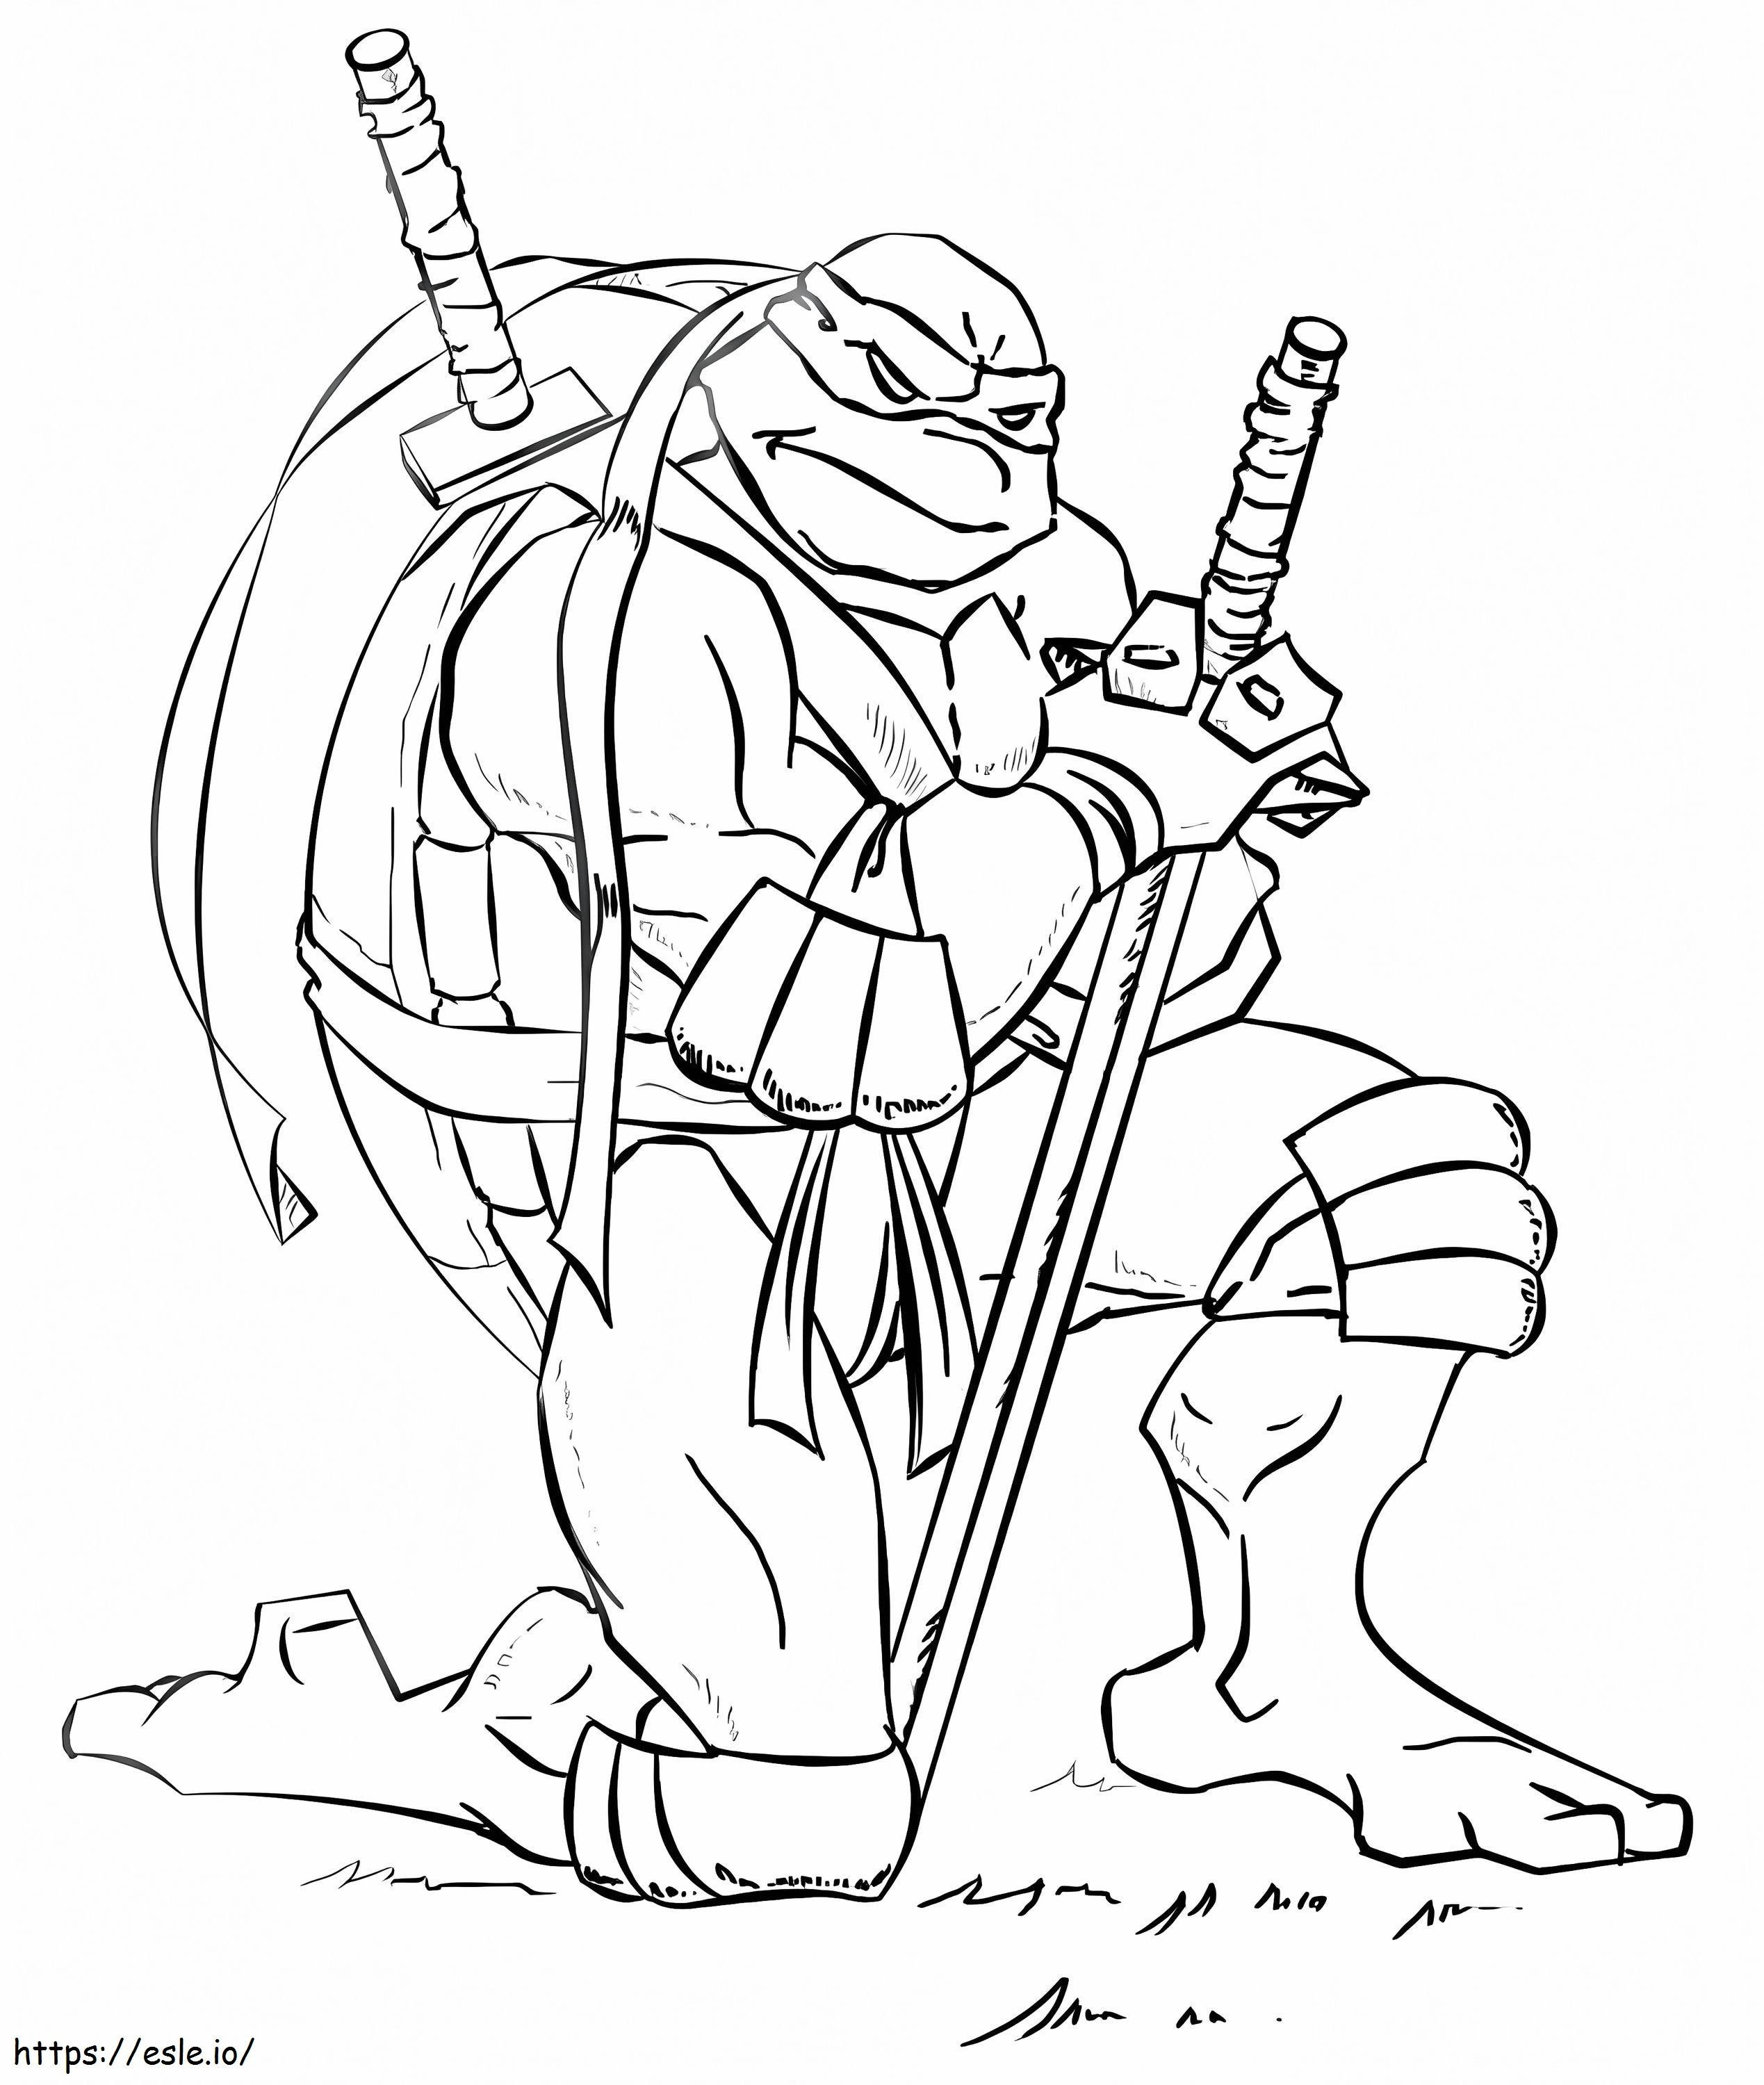 Leonardo das Tartarugas Ninja para colorir